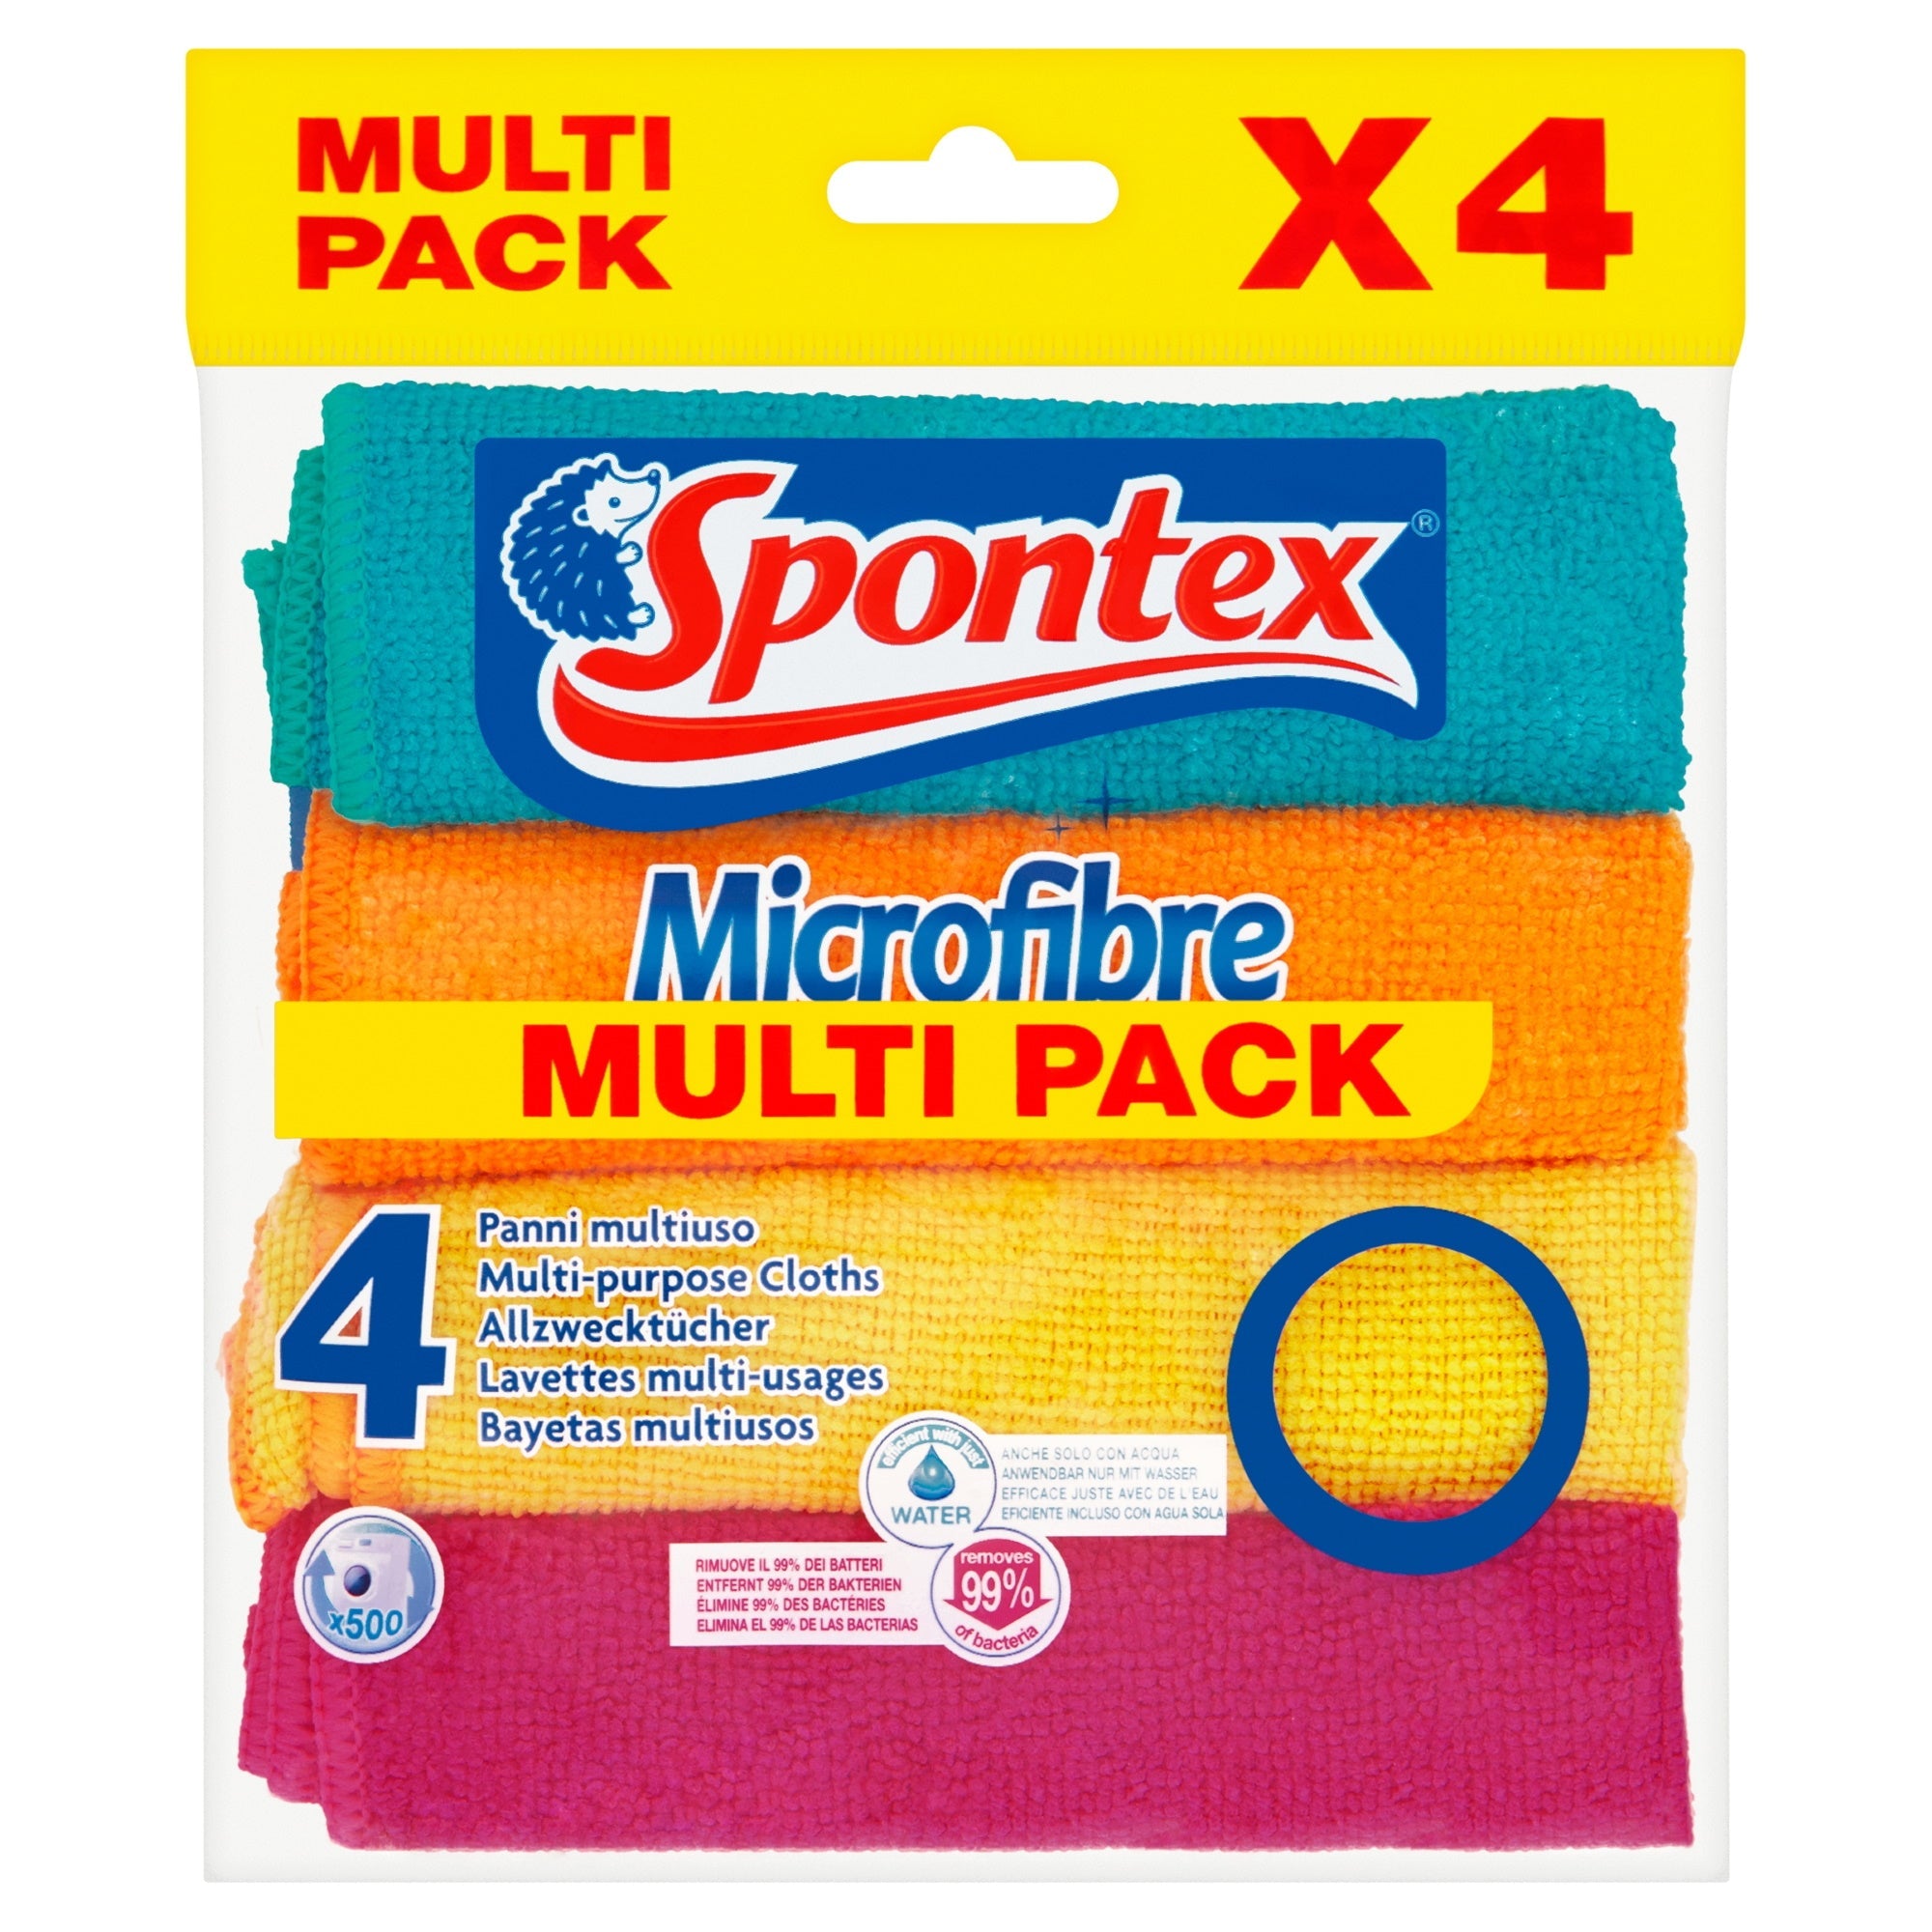 Spontex Microfibre Multi-Purpose Cloths Pack of 4 - Premium Dusters / Cloths from Spontex - Just $3.8! Shop now at W Hurst & Son (IW) Ltd